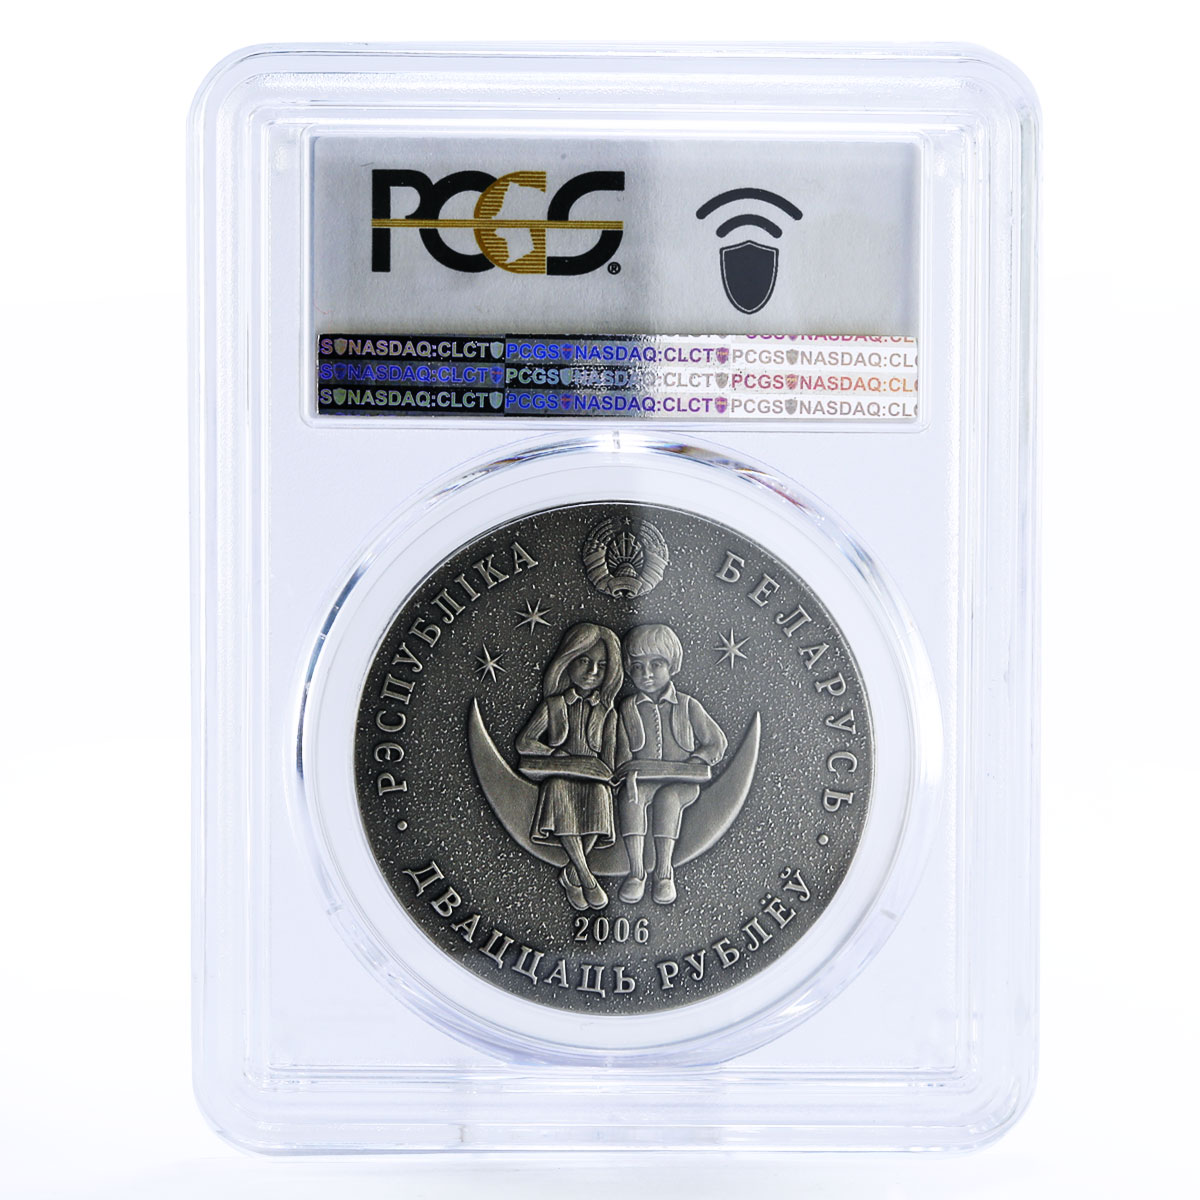 Belarus 20 rubles Fairy Tales Twelve Months Children MS70 PCGS silver coin 2006